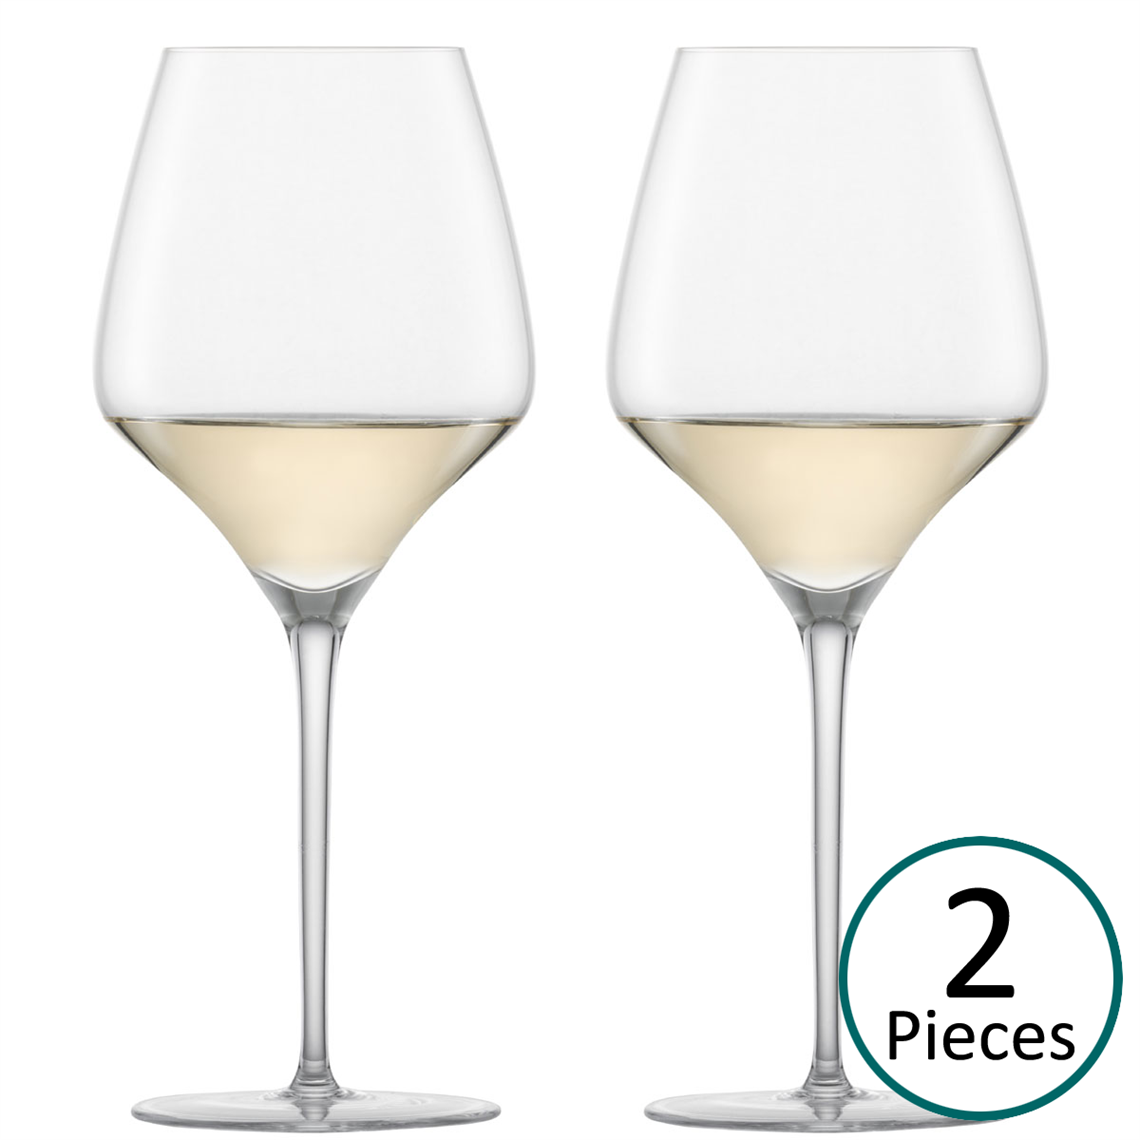 Zwiesel 1872 Alloro - Chardonnay Young, Oaky, Barrel Aged White Wine Glass - Set of 2